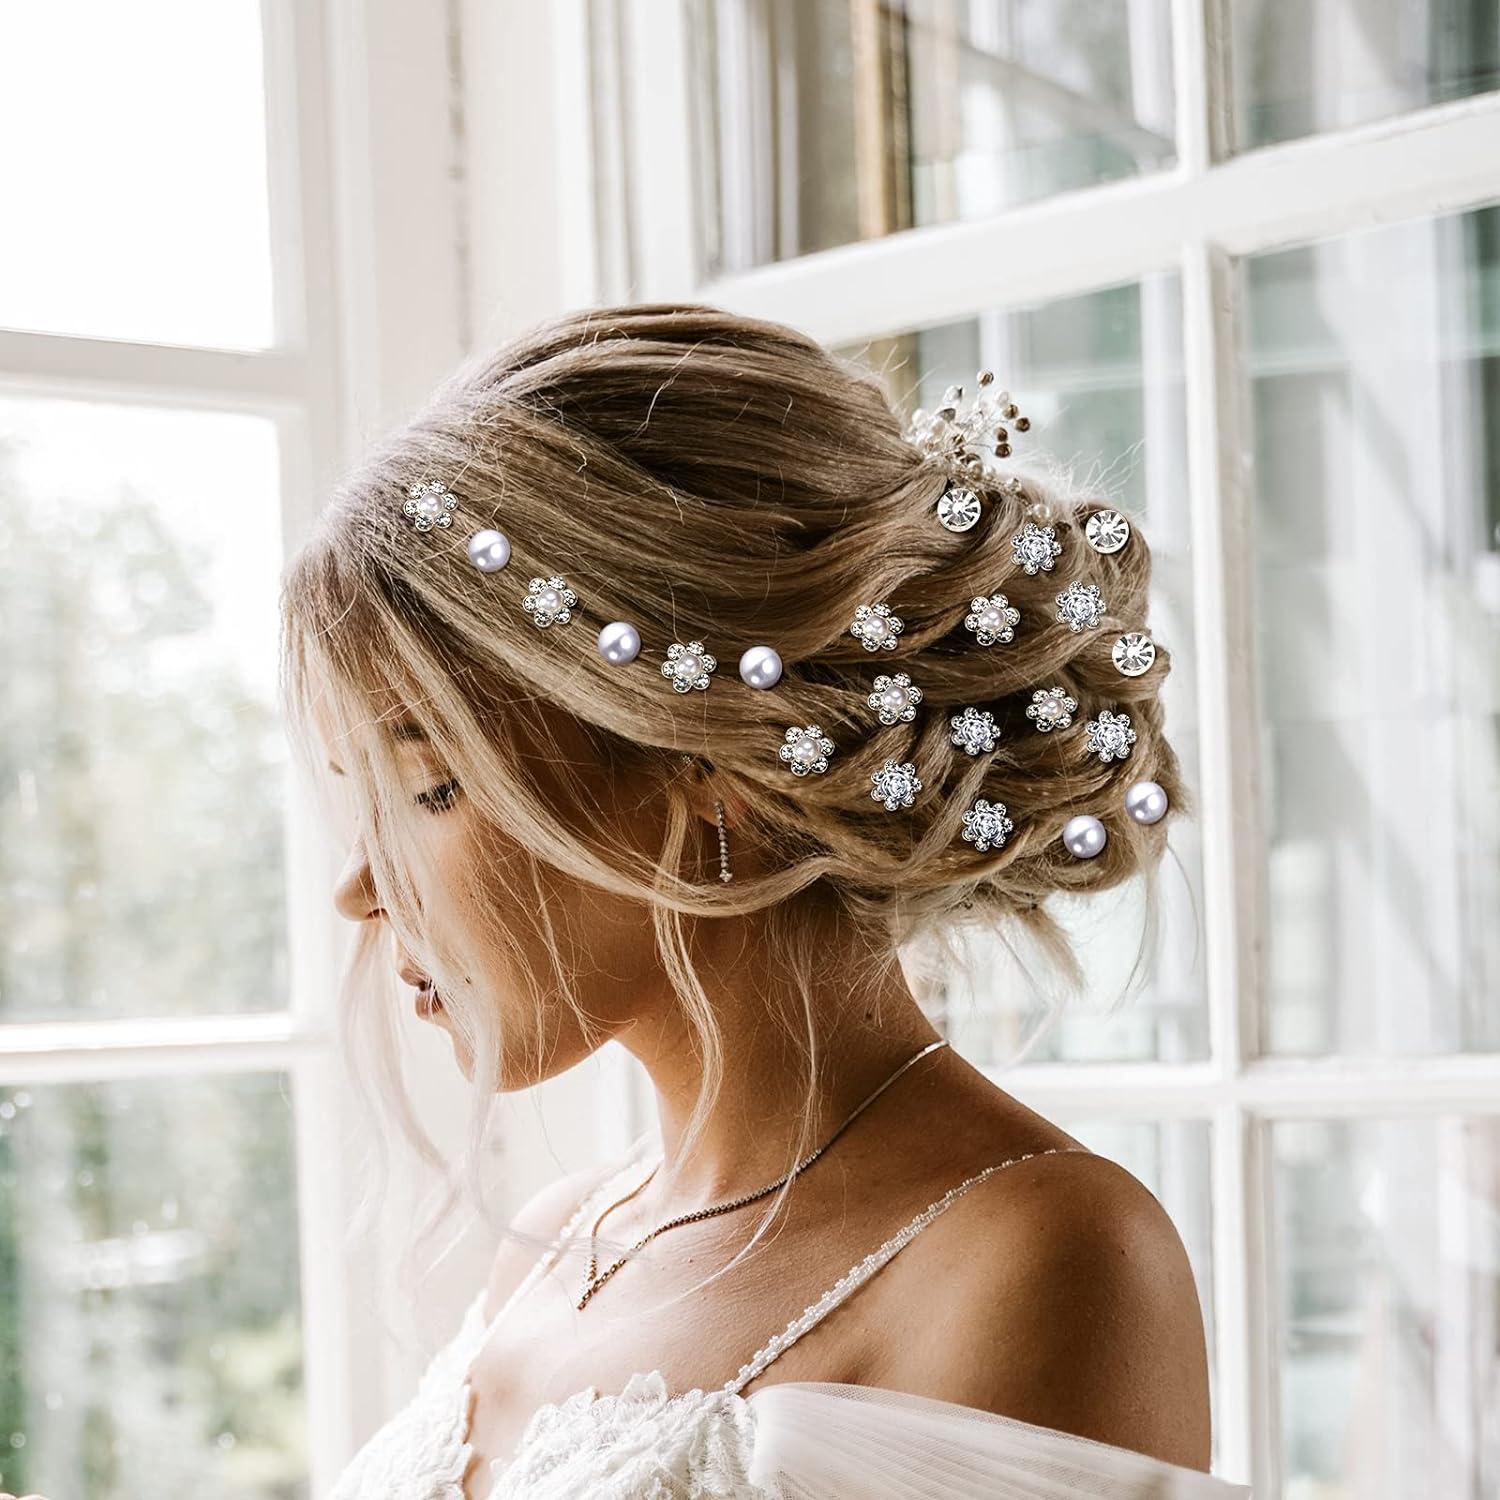 Pin on Wedding Bride Dress / Accessories